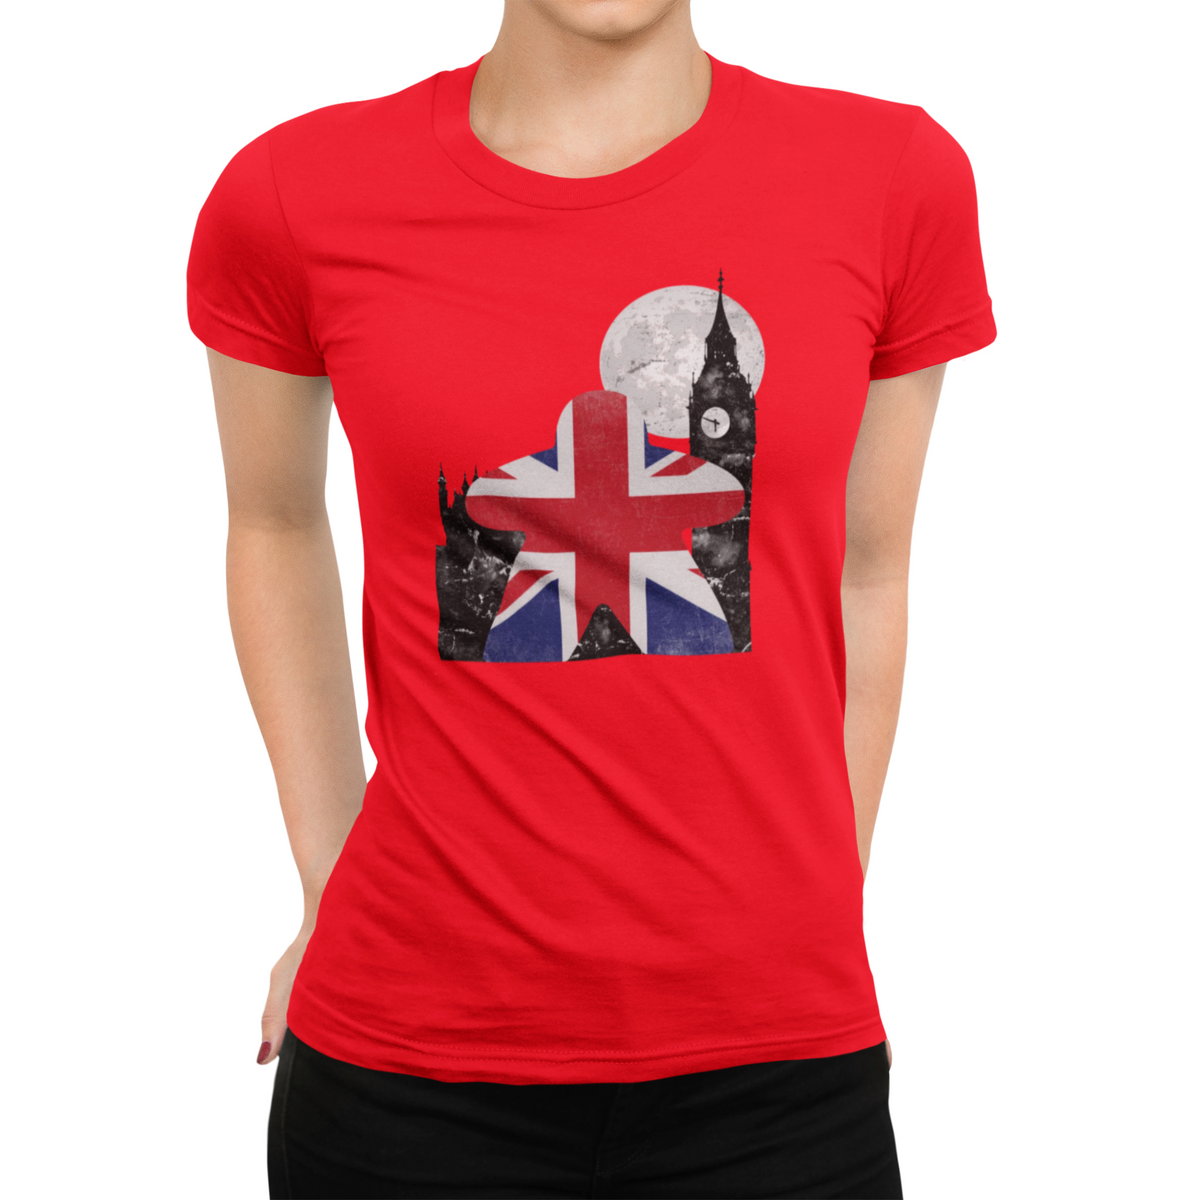 Union Jack British Flag Meeple Board Game T-Shirt